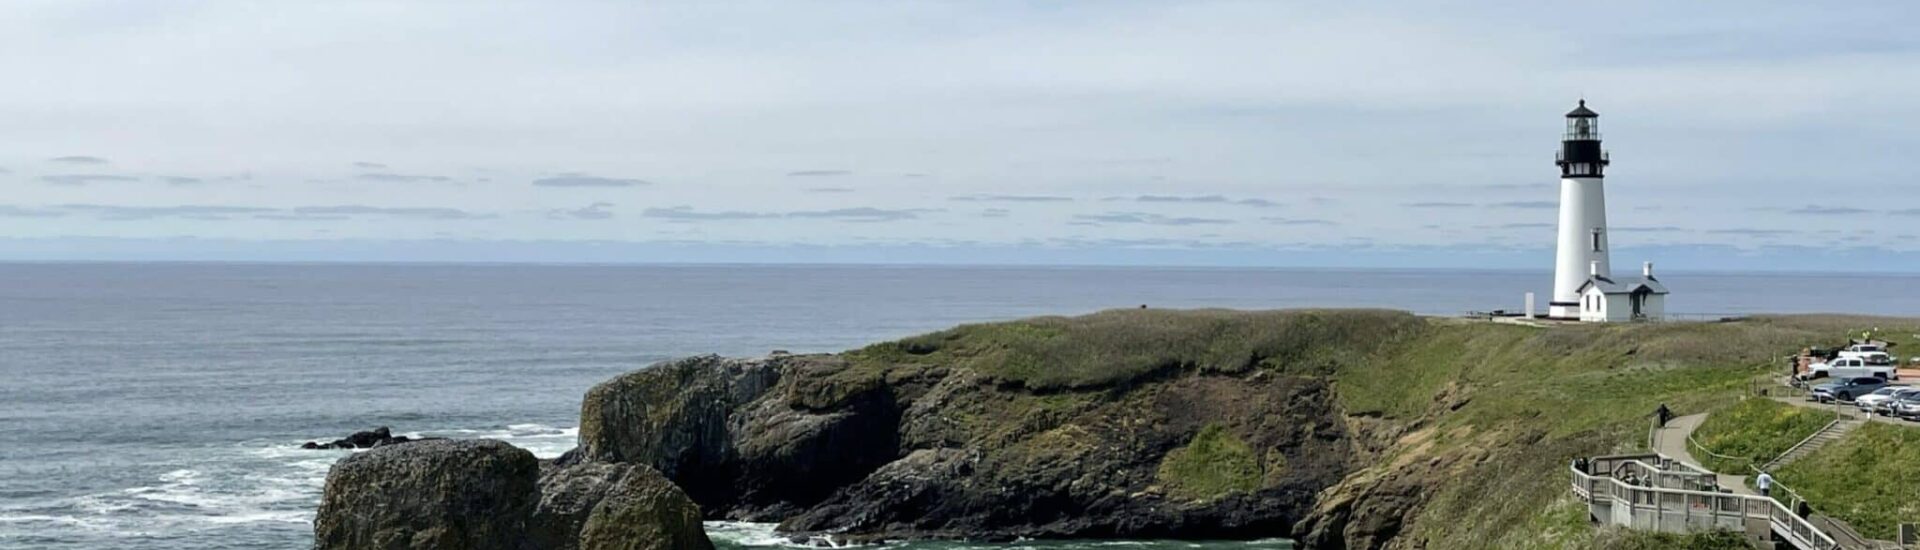 Yaquina Lighthouse on the Oregon Coast